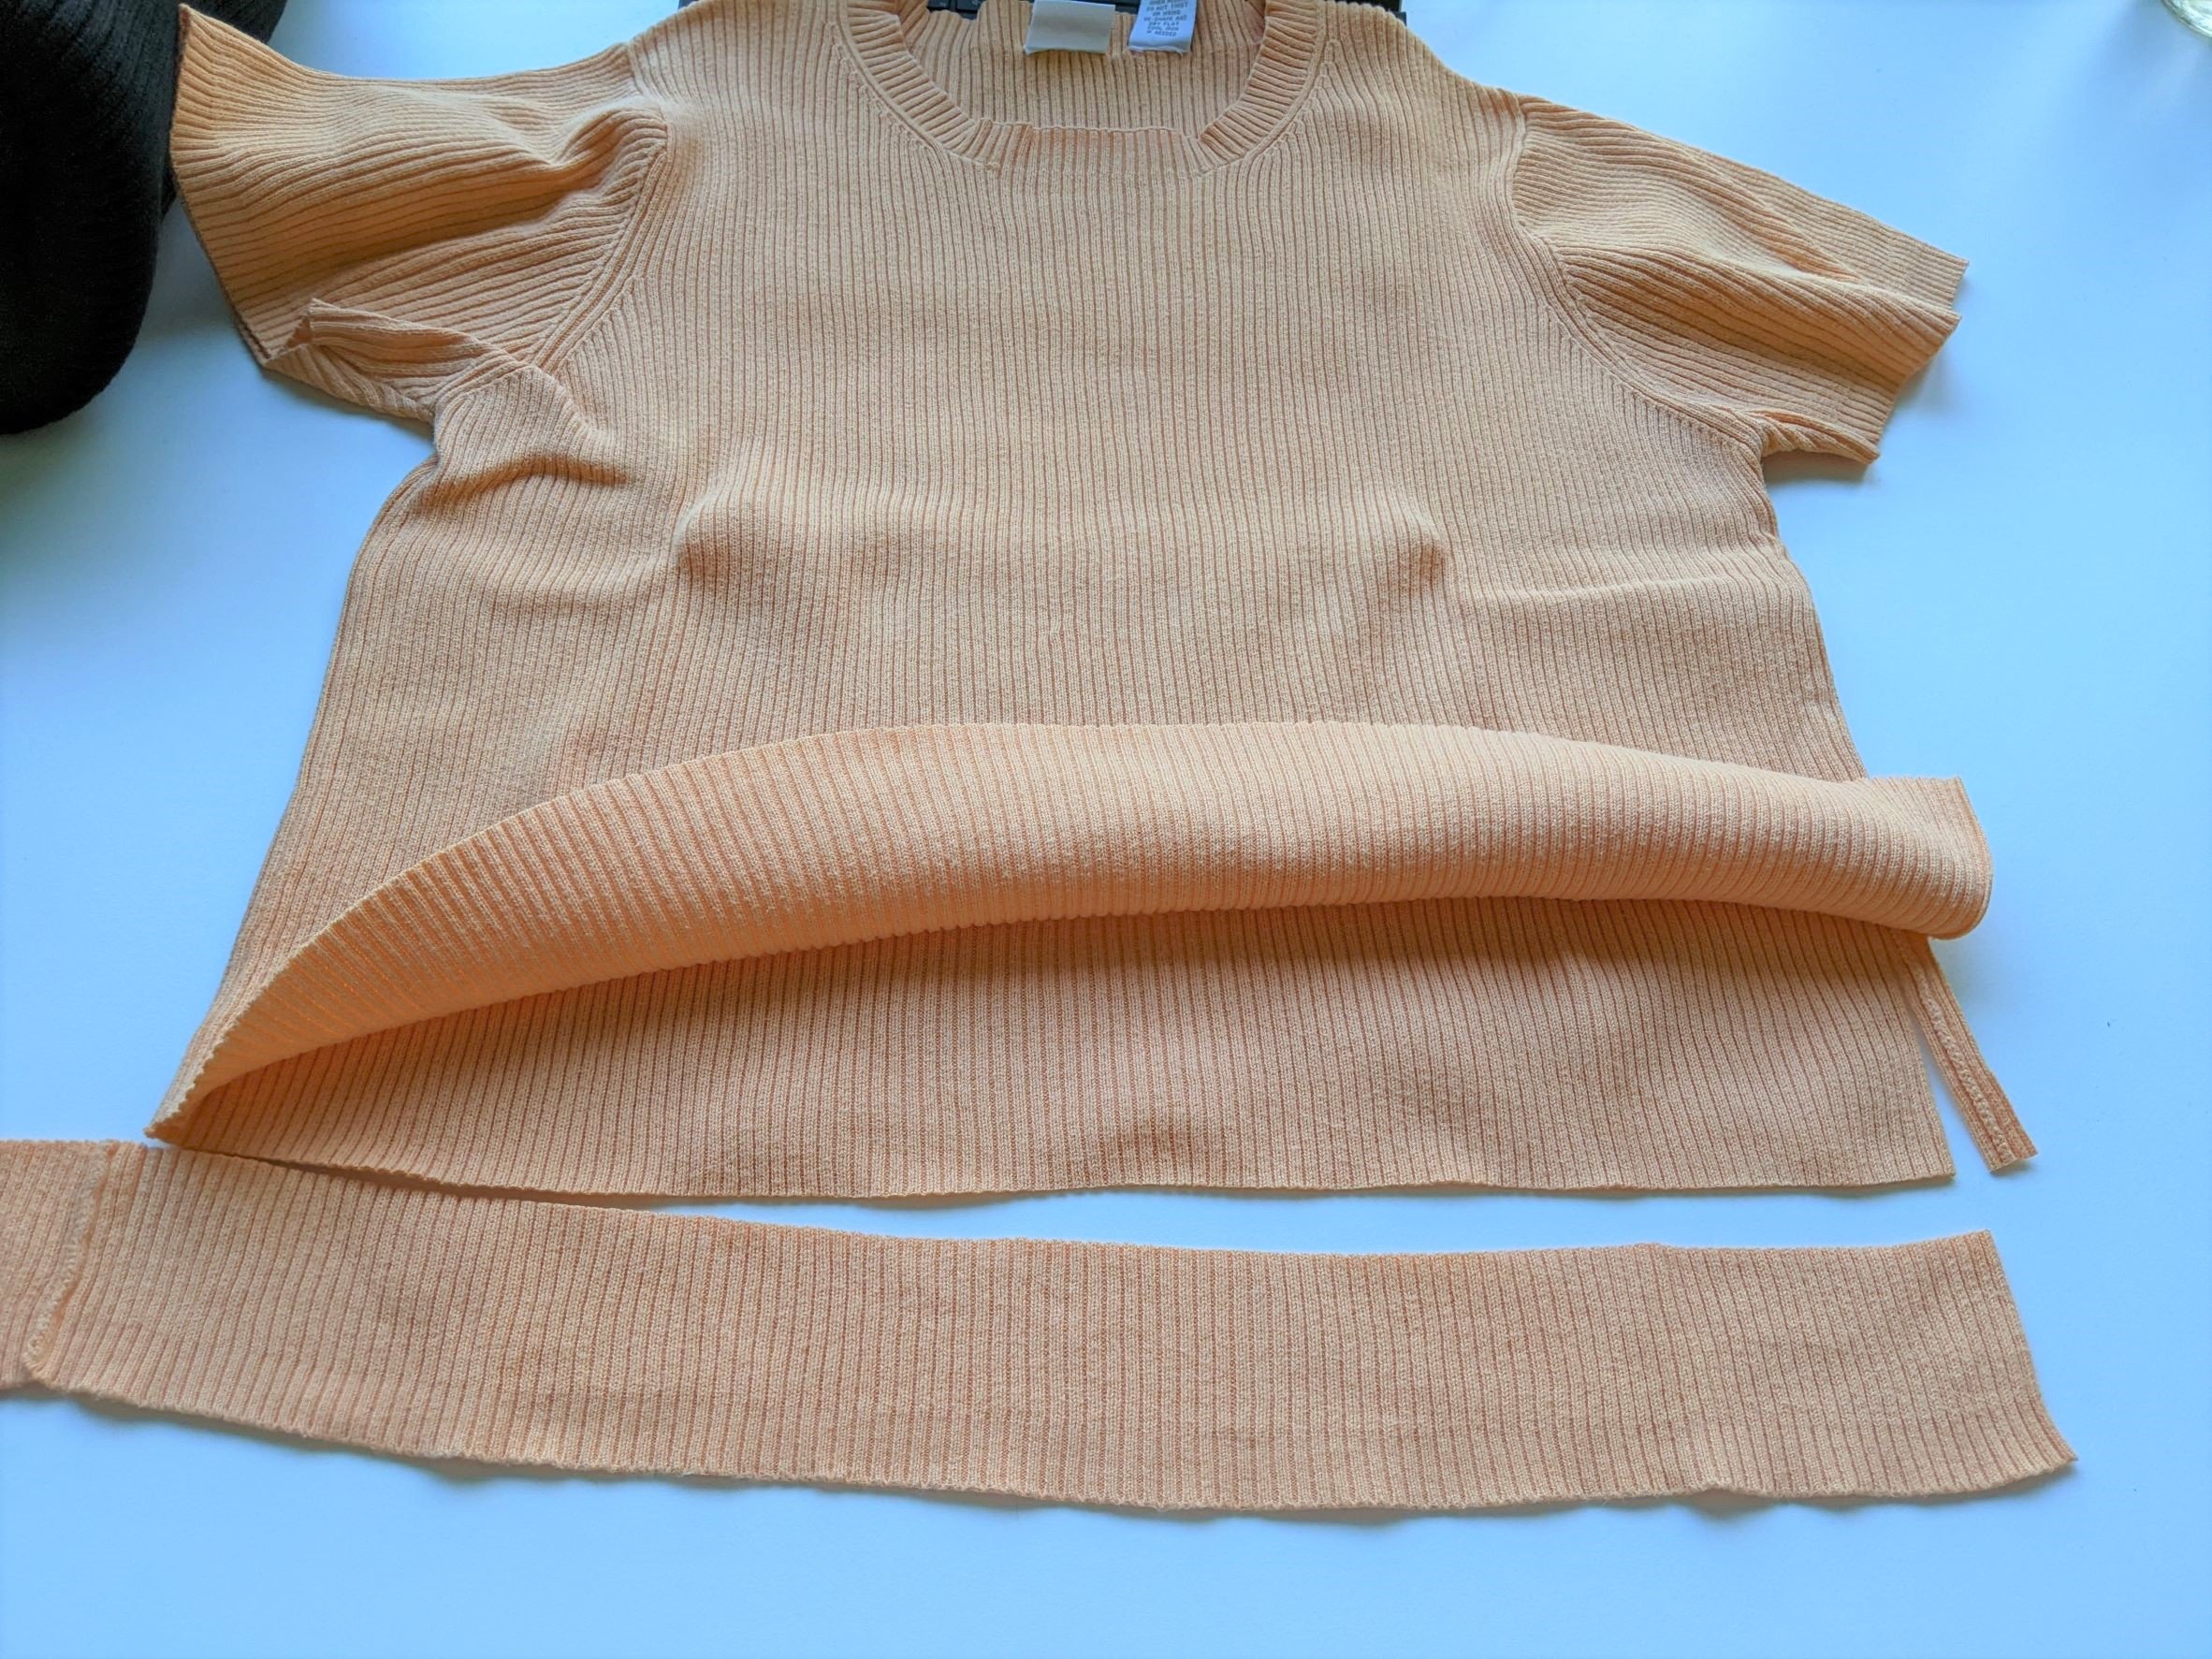 Orange sweater - resized.jpg